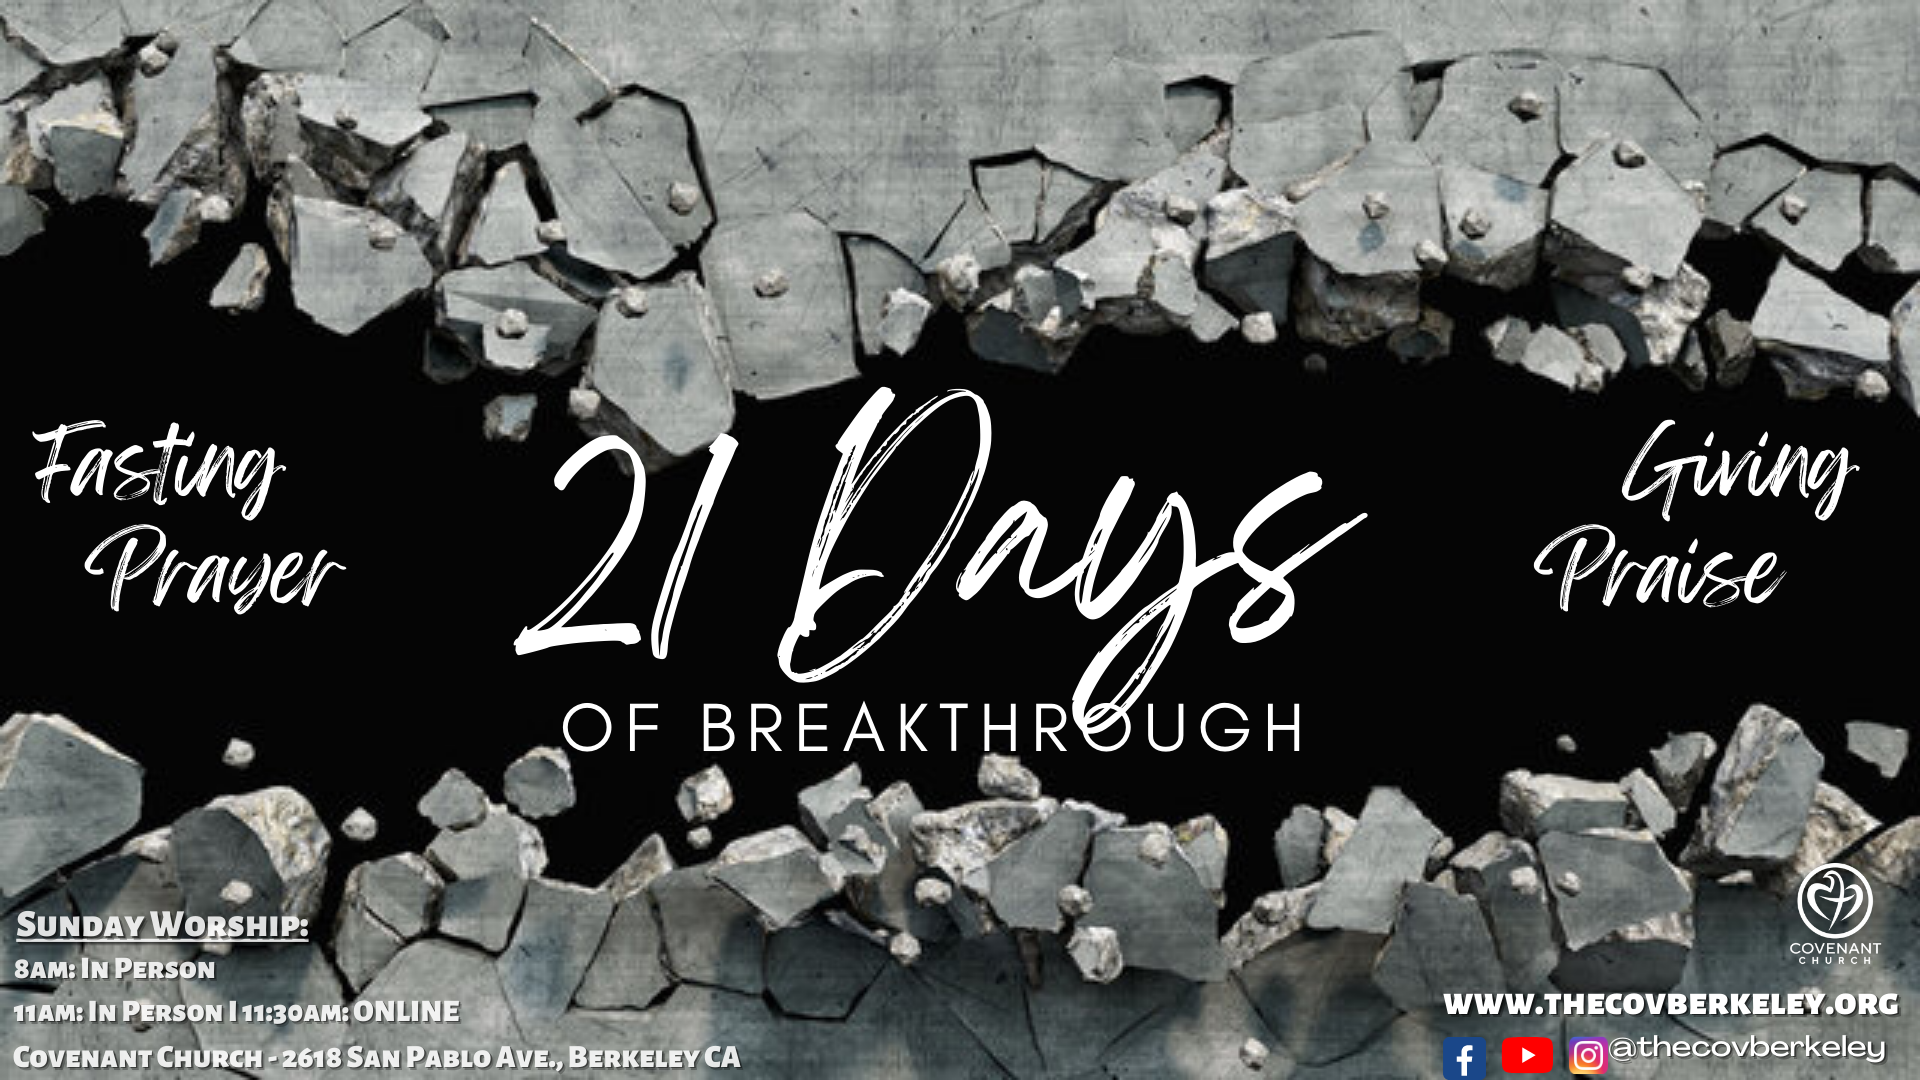 21 Days of Breakthrough